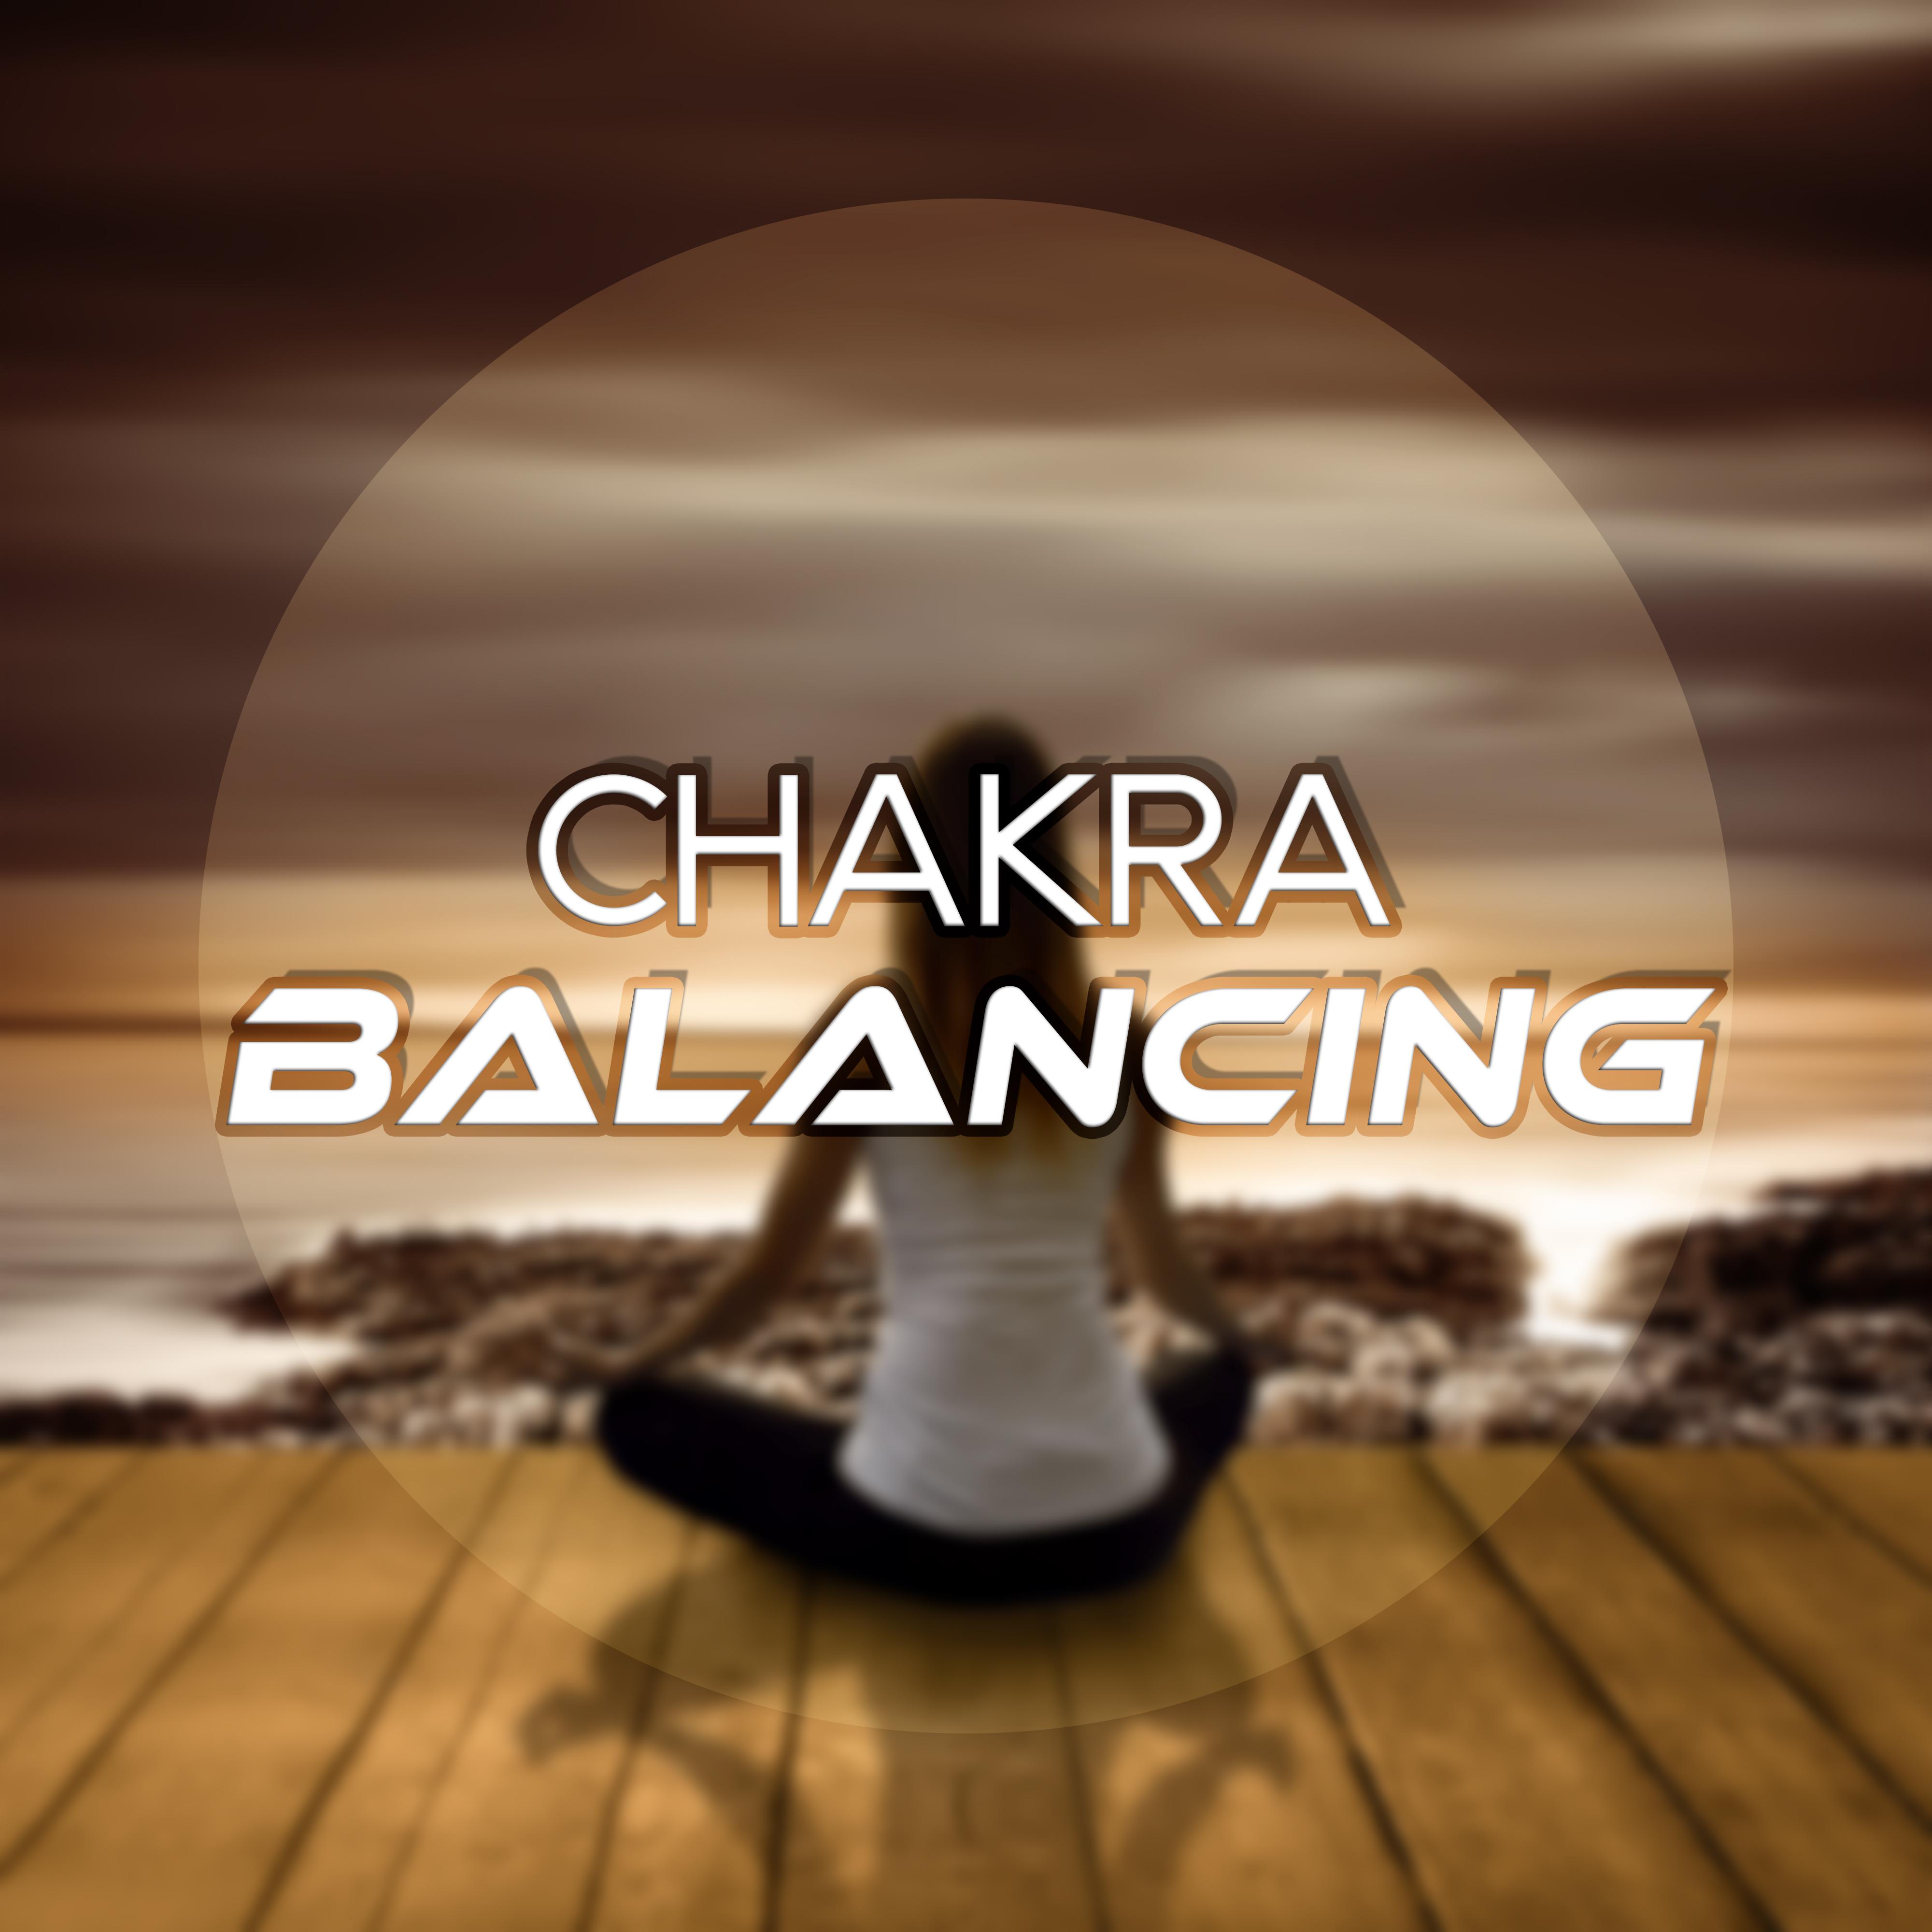 Chakra Balancing - Chakra Healing, Spirituality, Morning Prayer, Hatha Yoga, Mantras, Relaxation